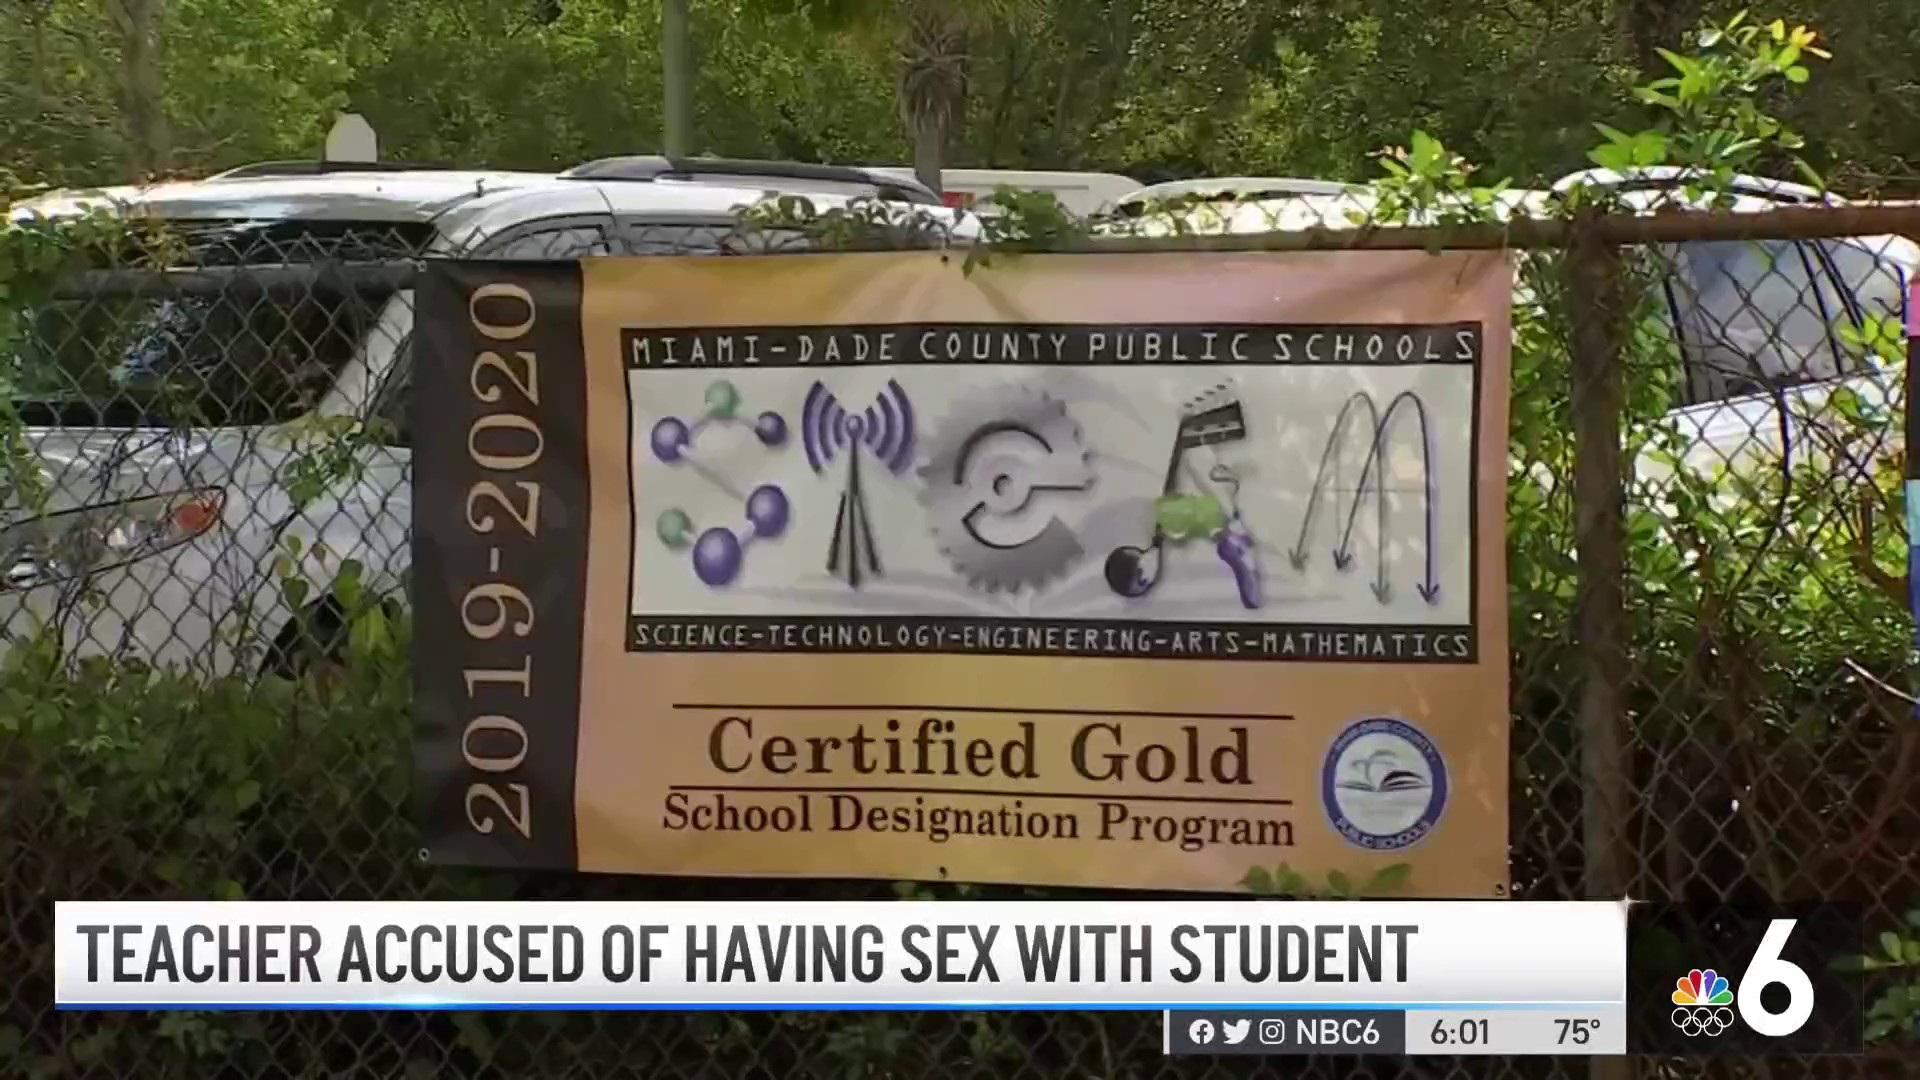 Teacher sex i in Miami